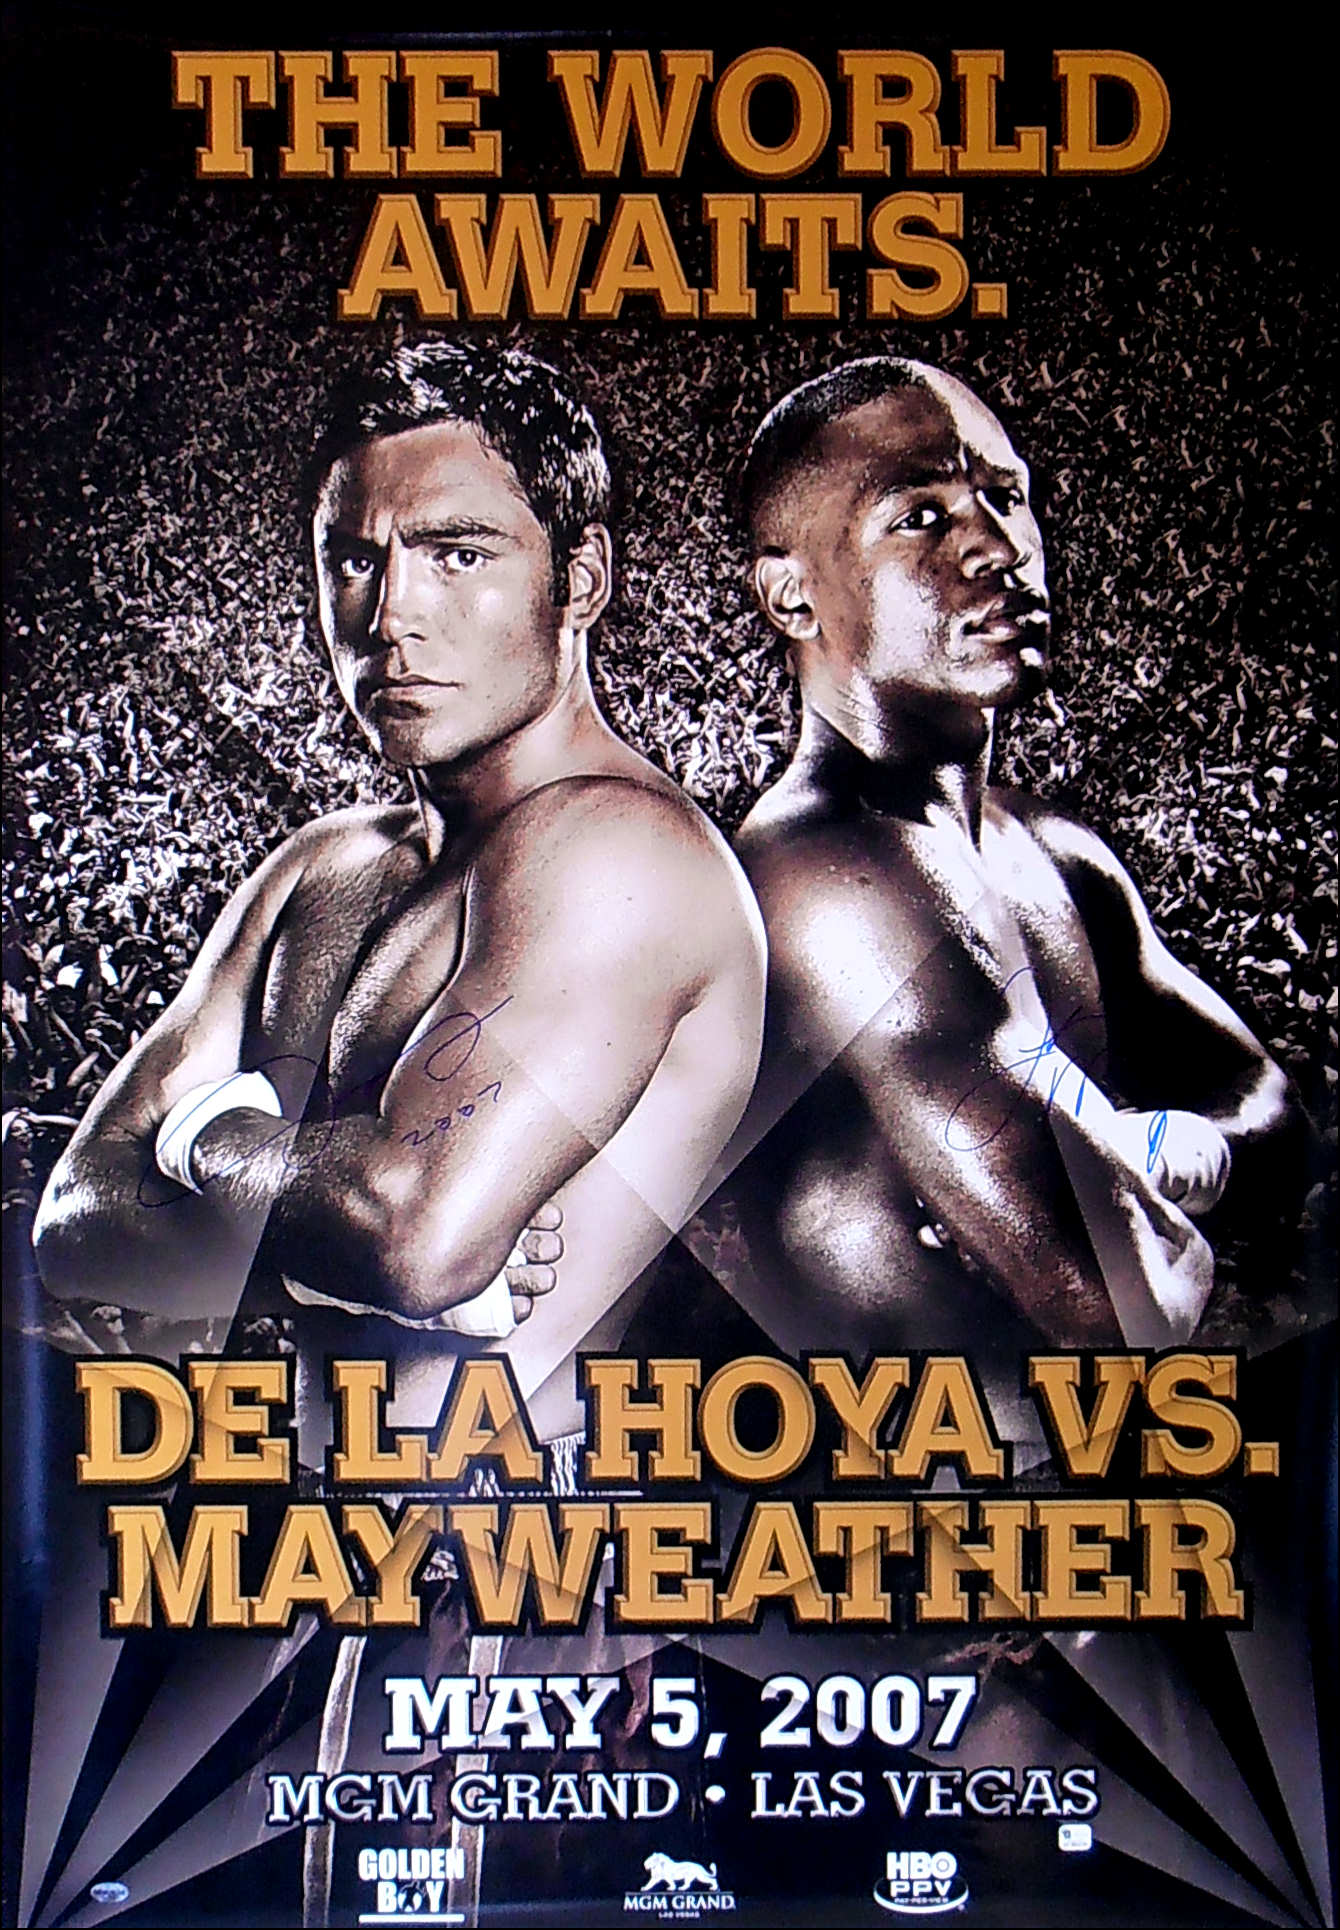 Details about    Floyd Mayweather Vs Vargas 1999 HBO Original Print Ad 8.5 x 11"